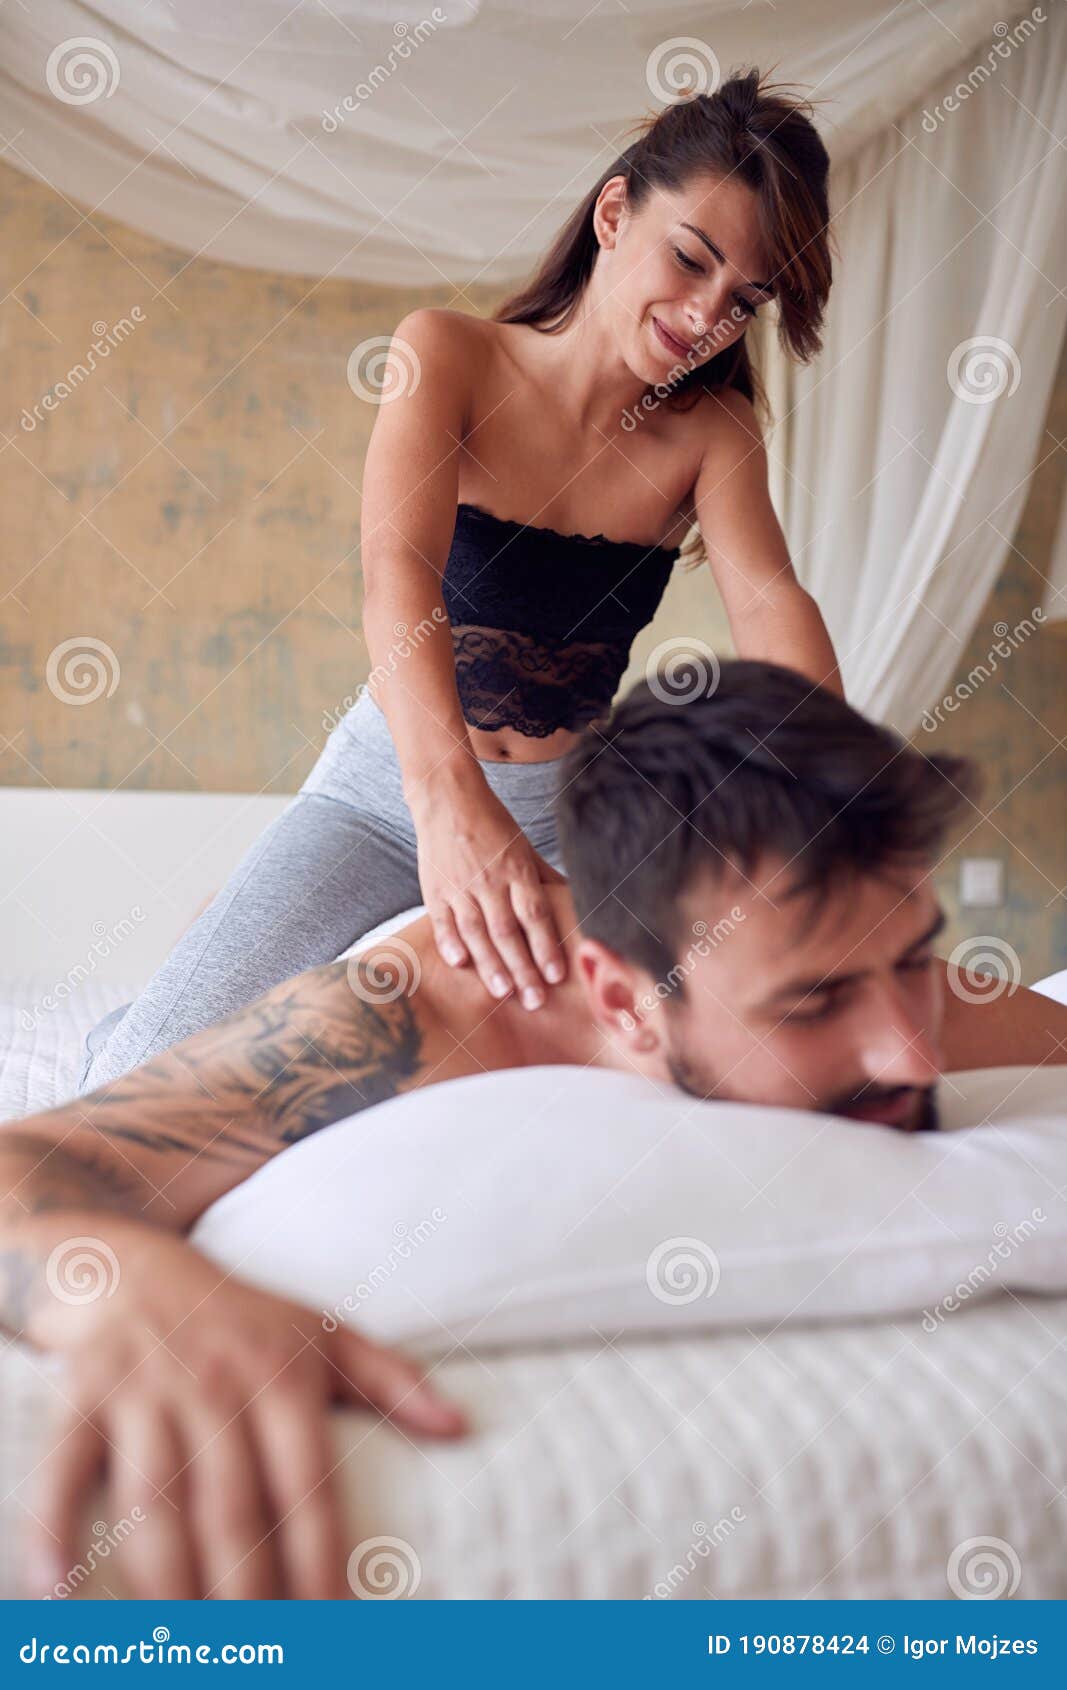 Classy Brunette Babes Enjoys Hot Massage by Naughty Masseuse